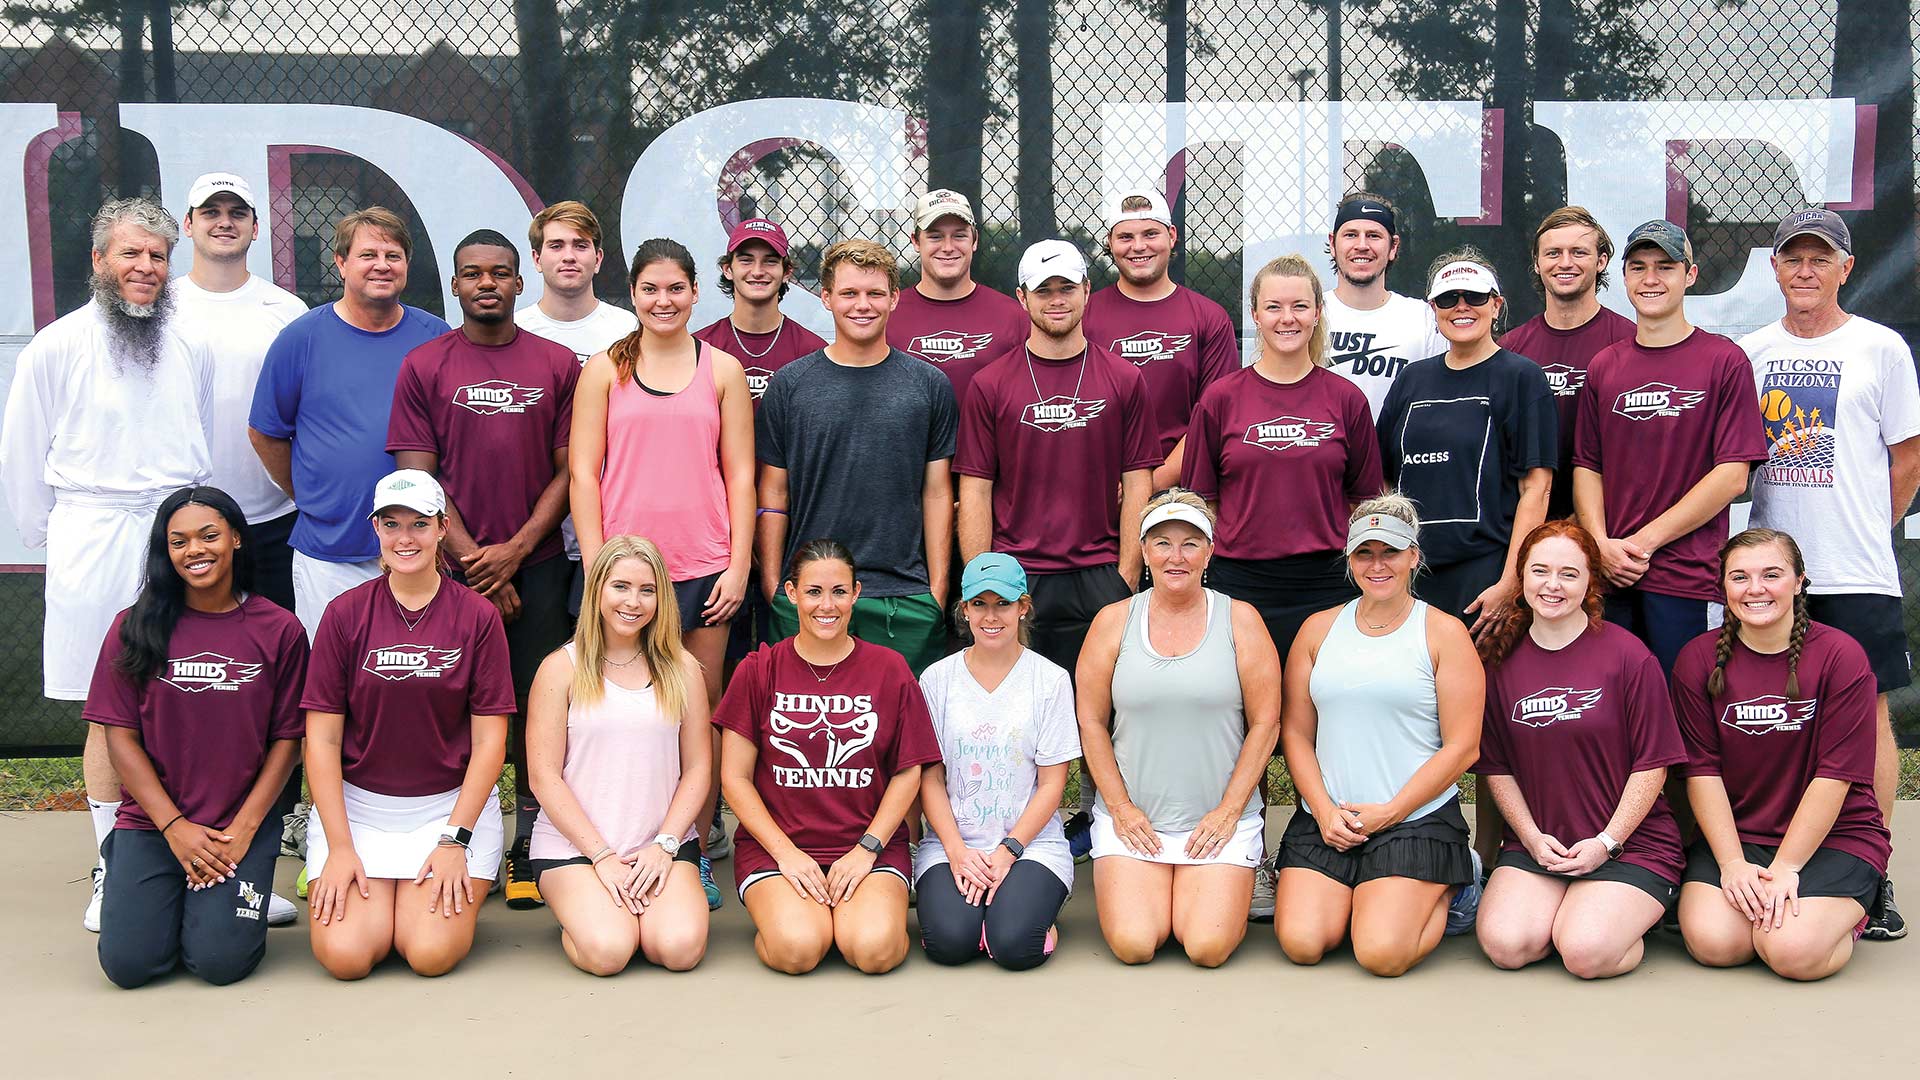 Group photo of tennis alumni